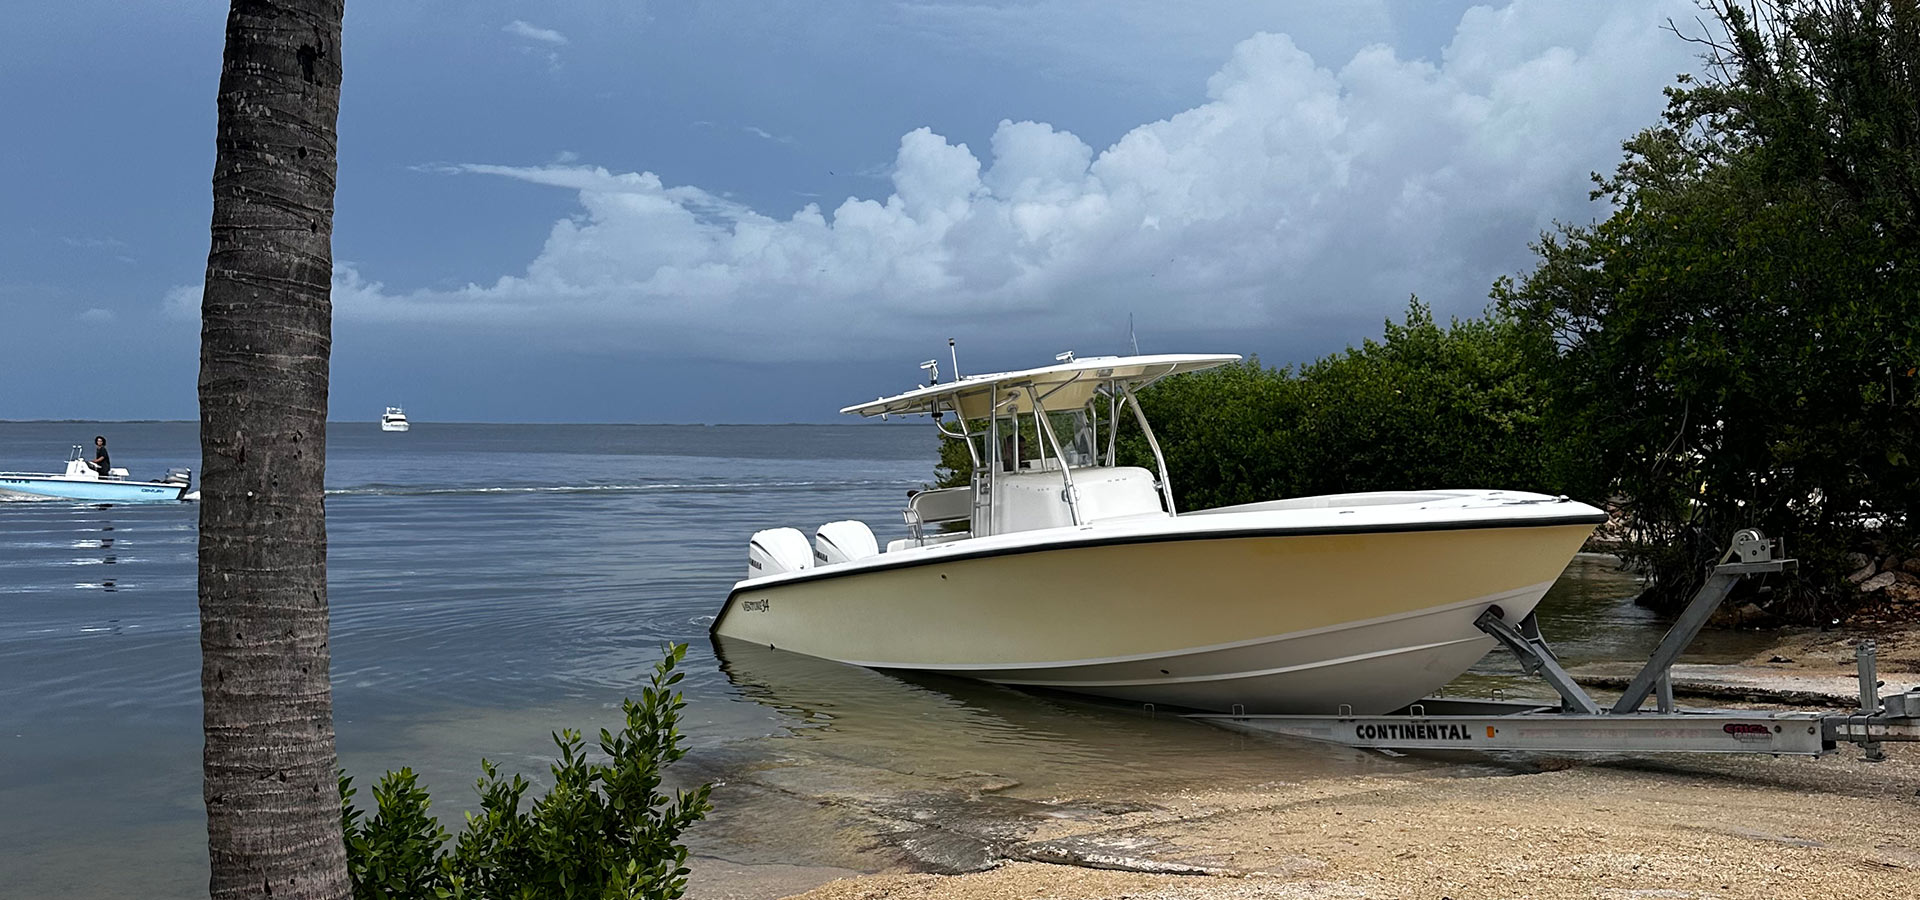 Premier Fishing Charters in Key Largo, Florida